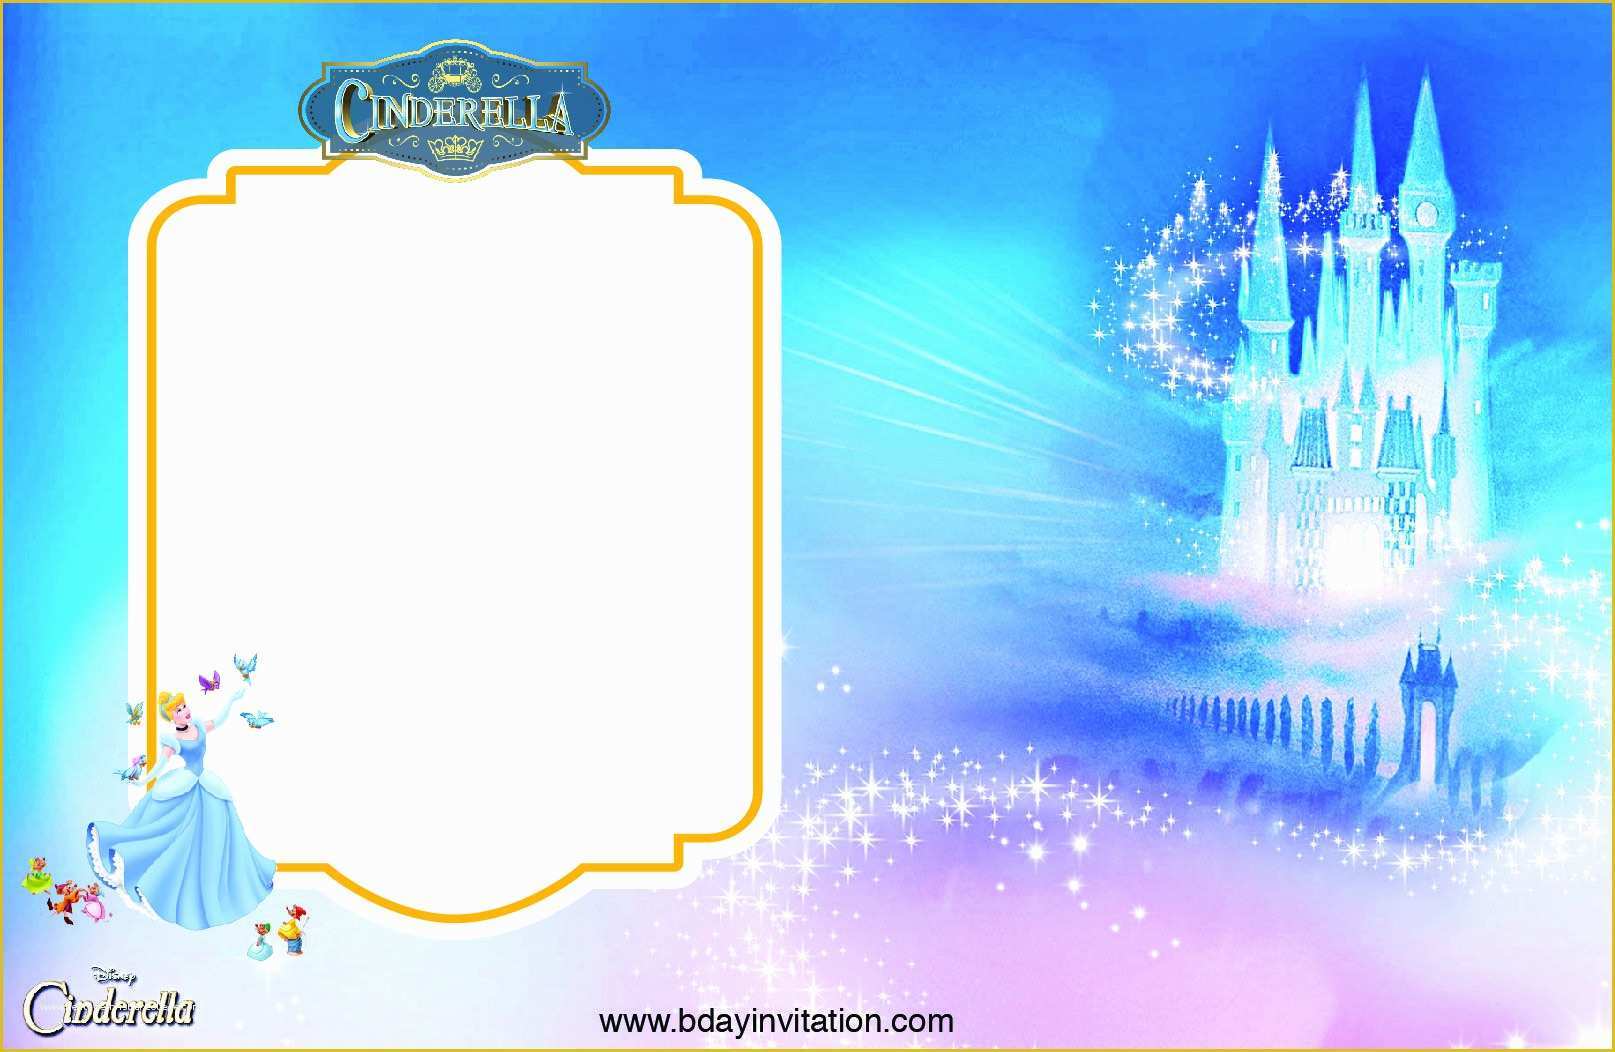 Free Cinderella Birthday Invitation Template Of Get Free Printable Disney Cinderella Party Invitation